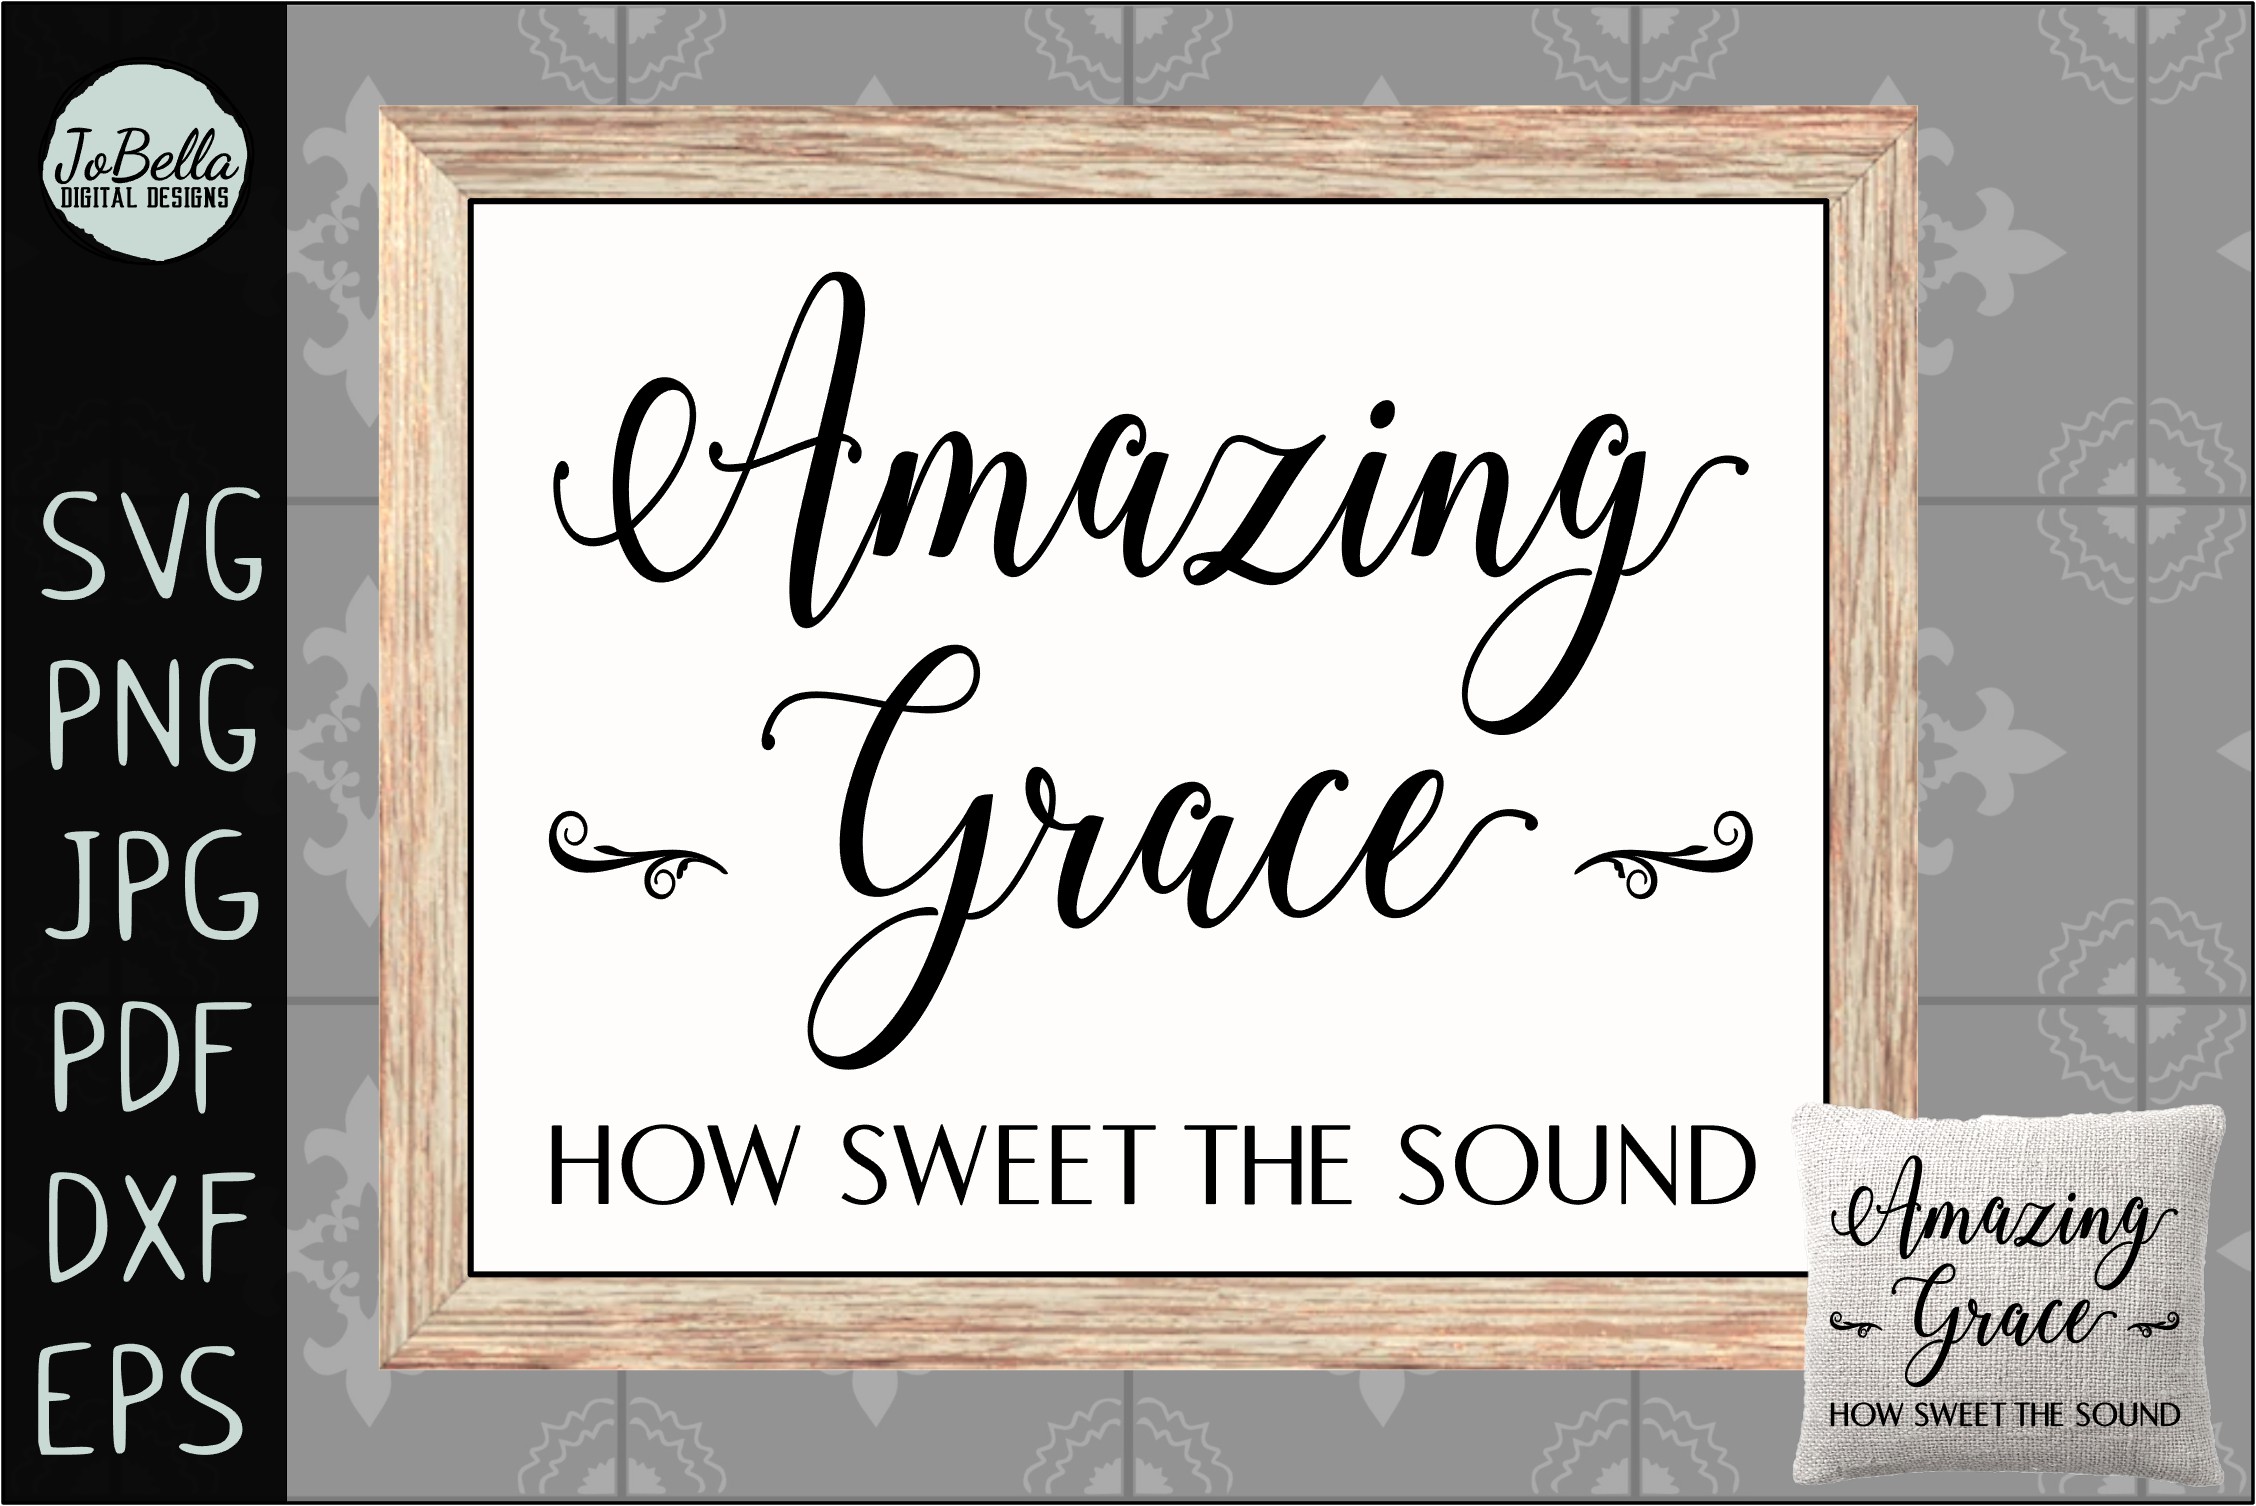 Amazing Grace SVG, Sublimation & Printable Christian Design (304819